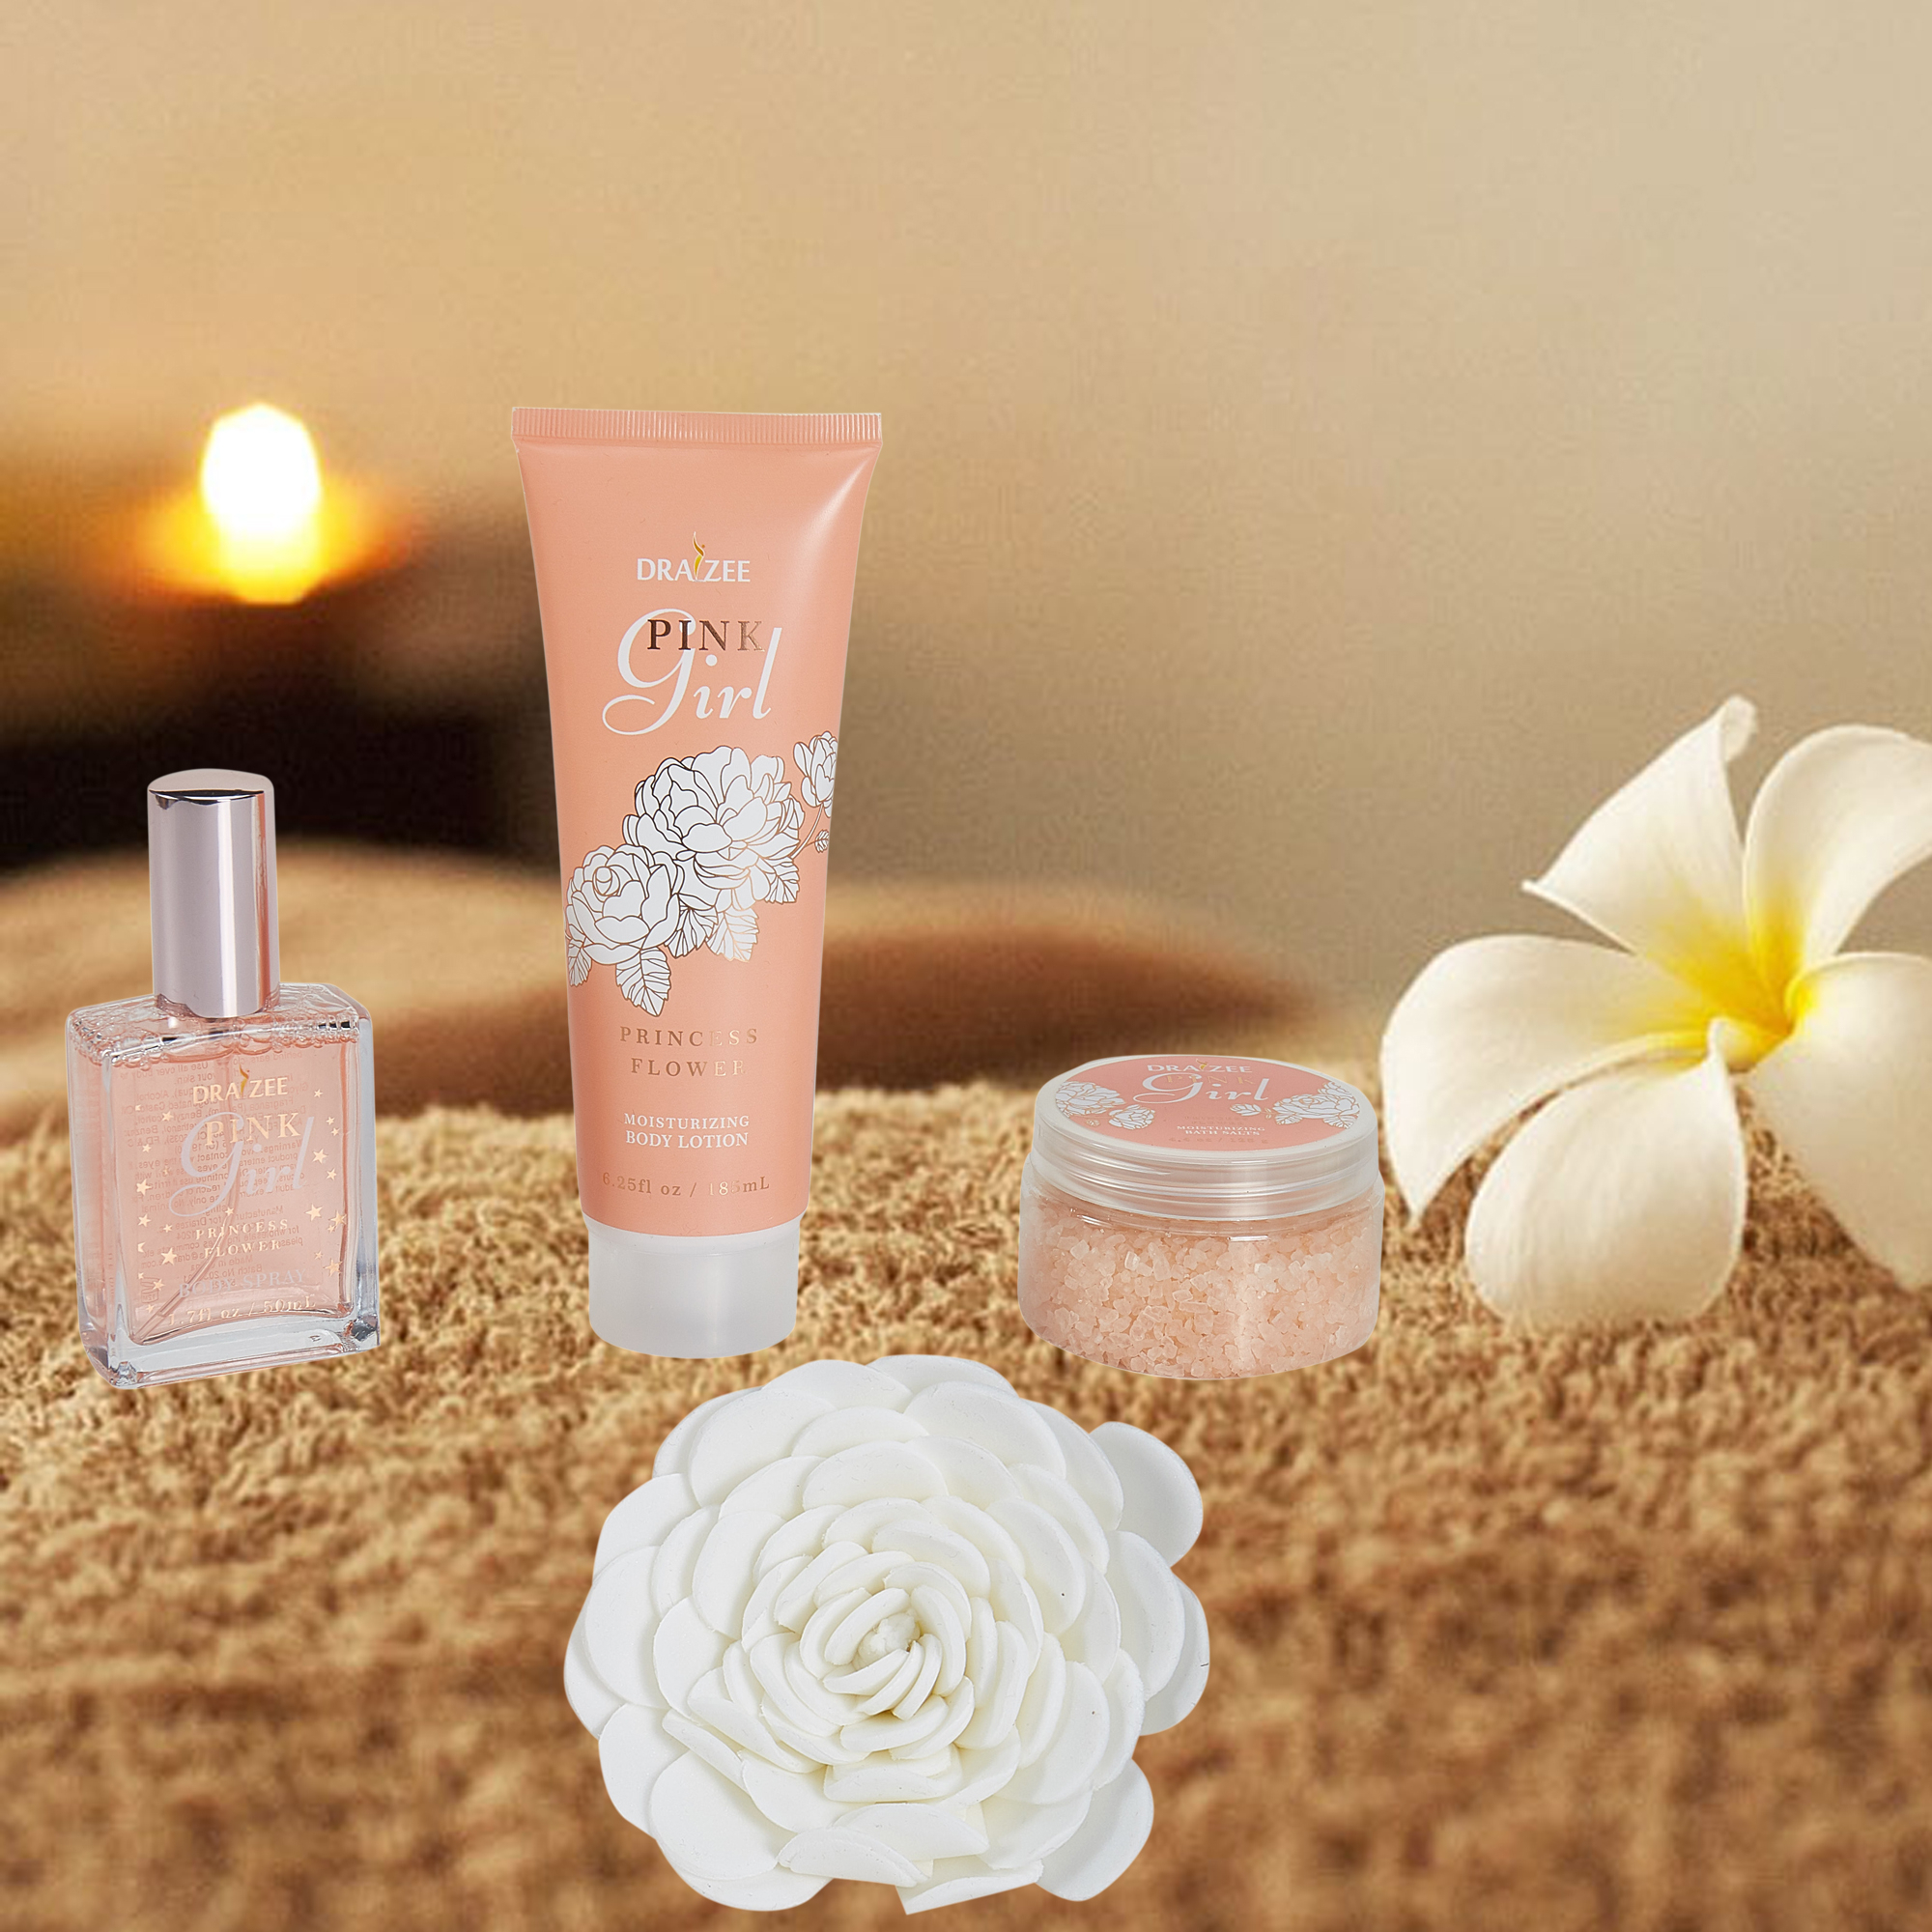 Draizee Bath Gift Set For Girls & Women W/ Flower Fragrance, 4 Pieces, Skin Care Set Includes Body Lotion, Body Mist, Bath Salts, Body Puff